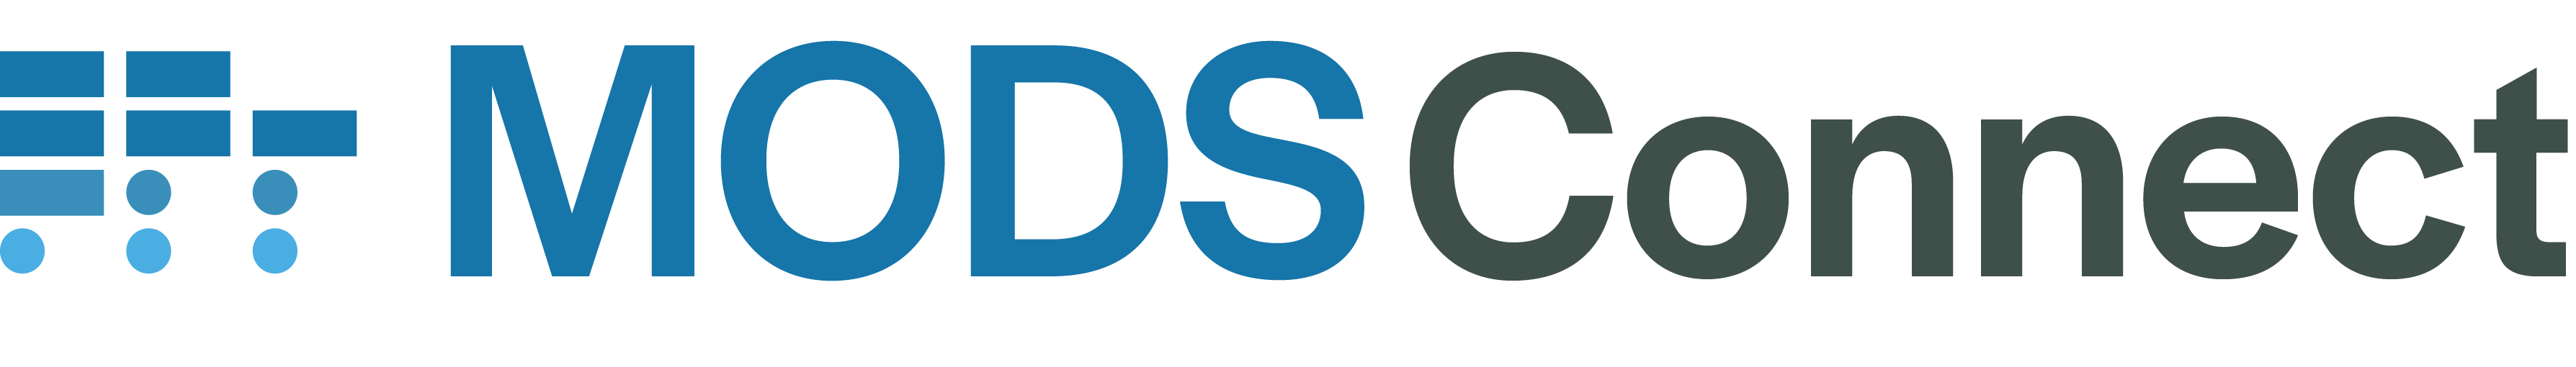 MODS-Connect-logo-Main_4x